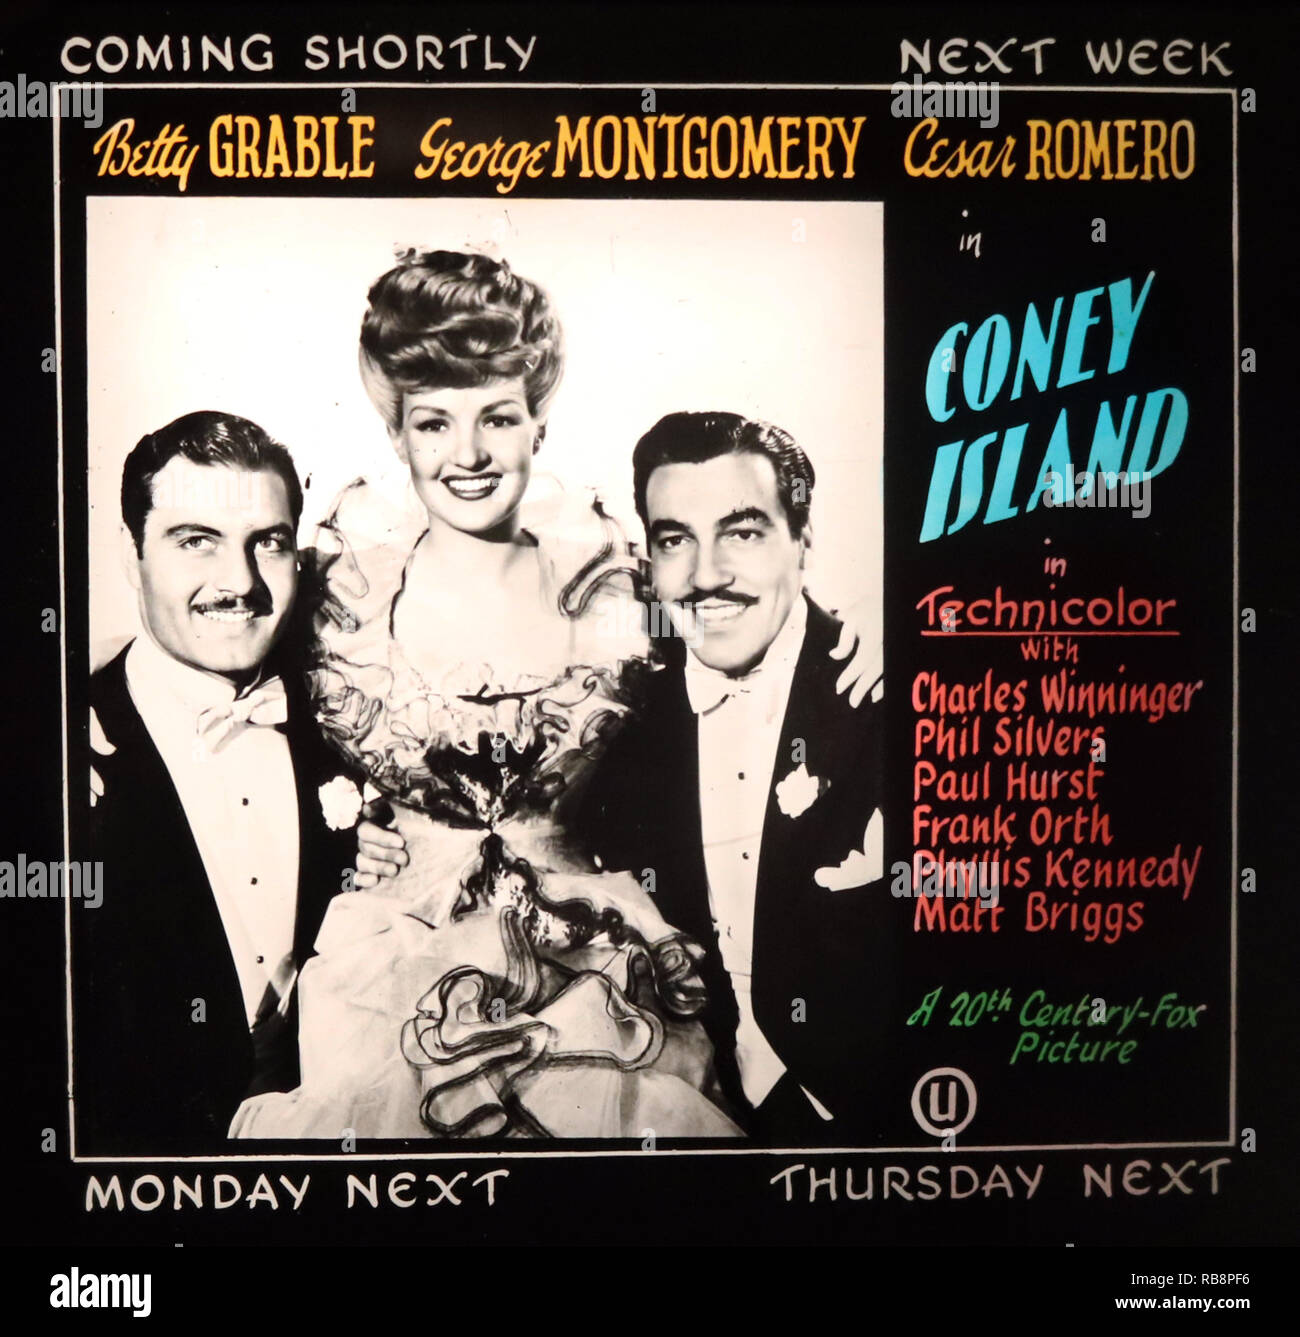 Betty Grable George Montgomery Cesar Romeo 'Coney Island' movie advertisement Stock Photo